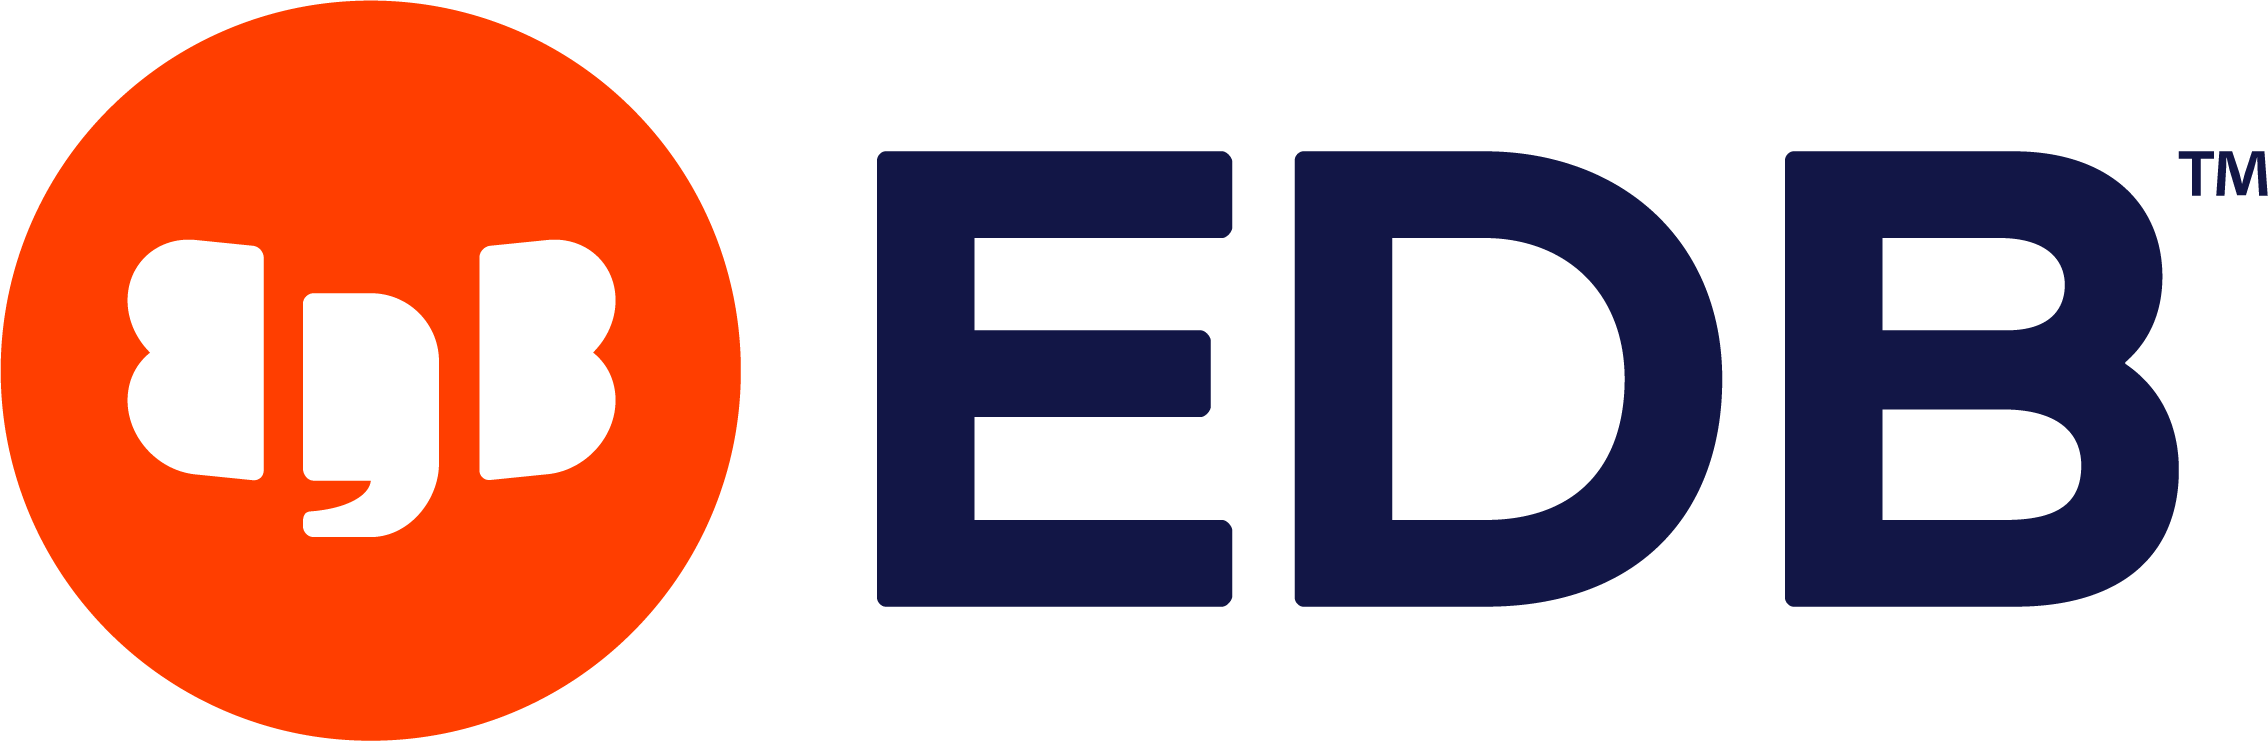 Enterprise EDB